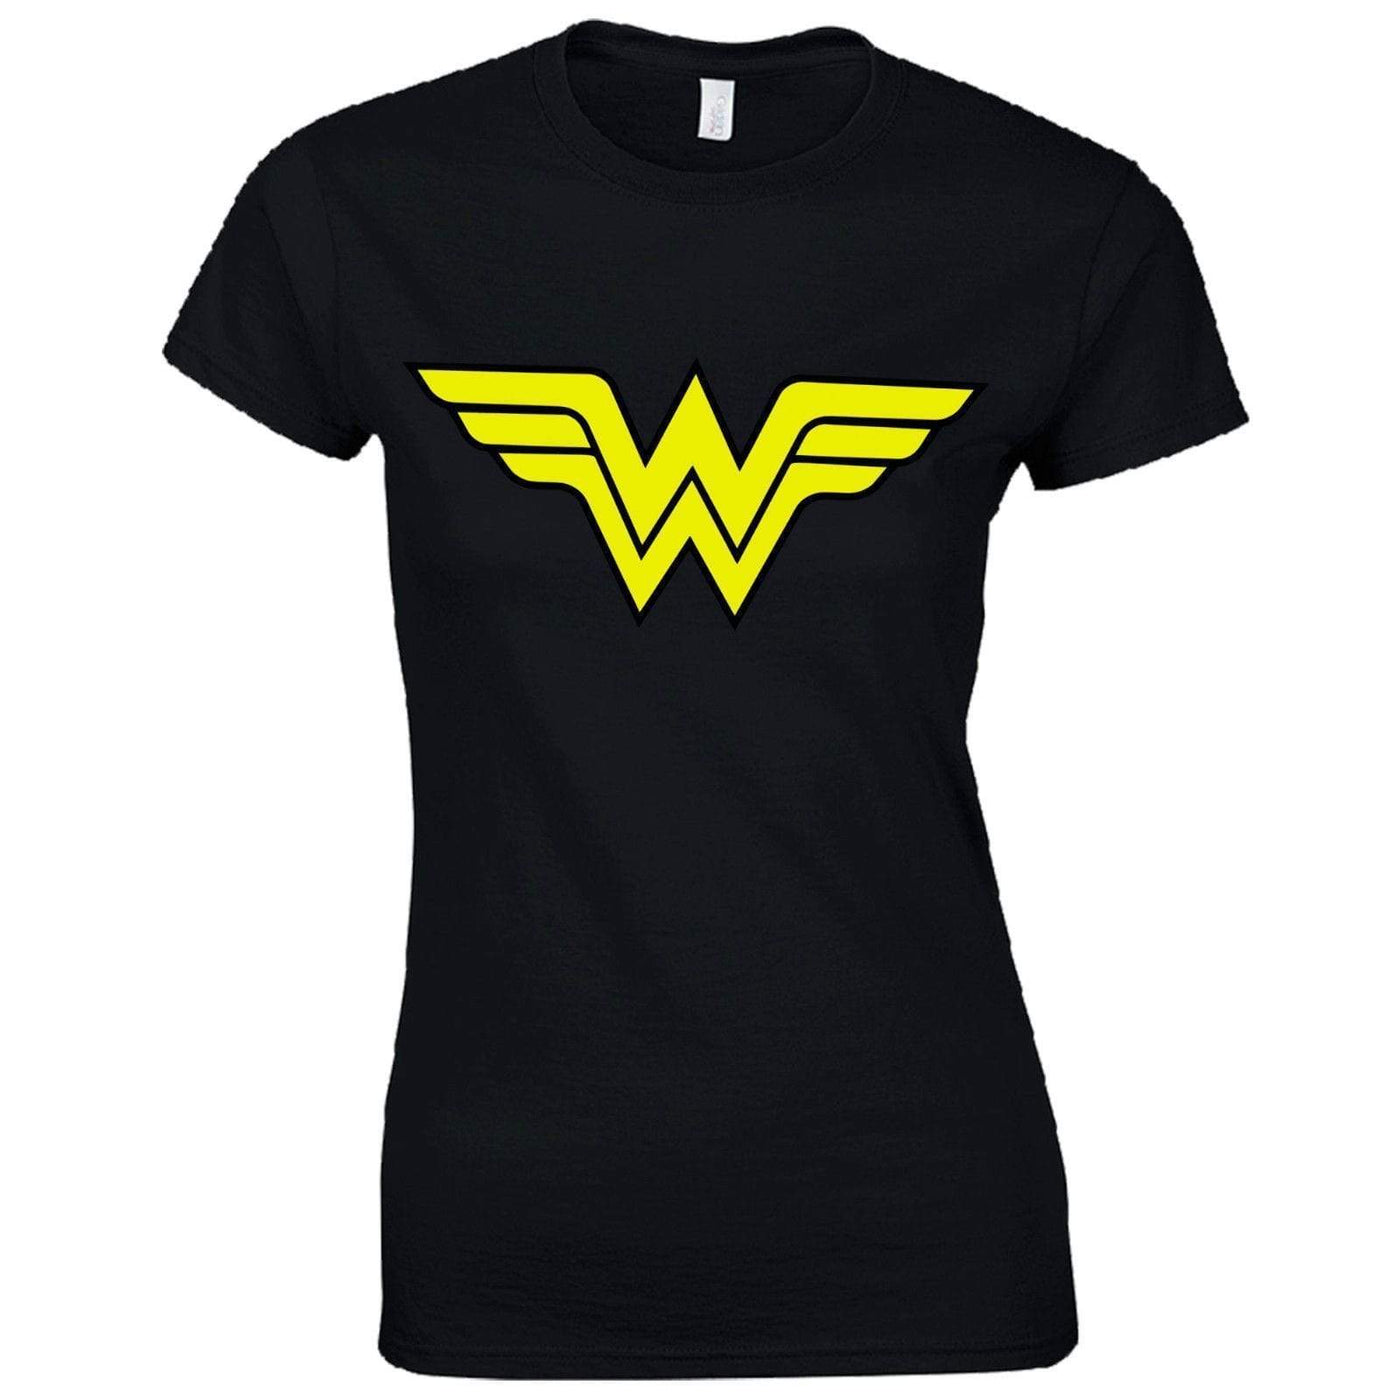 OtakuForm-SH T-Shirt S / Black Wonder Woman Superhero T-Shirt (in 3 colors)